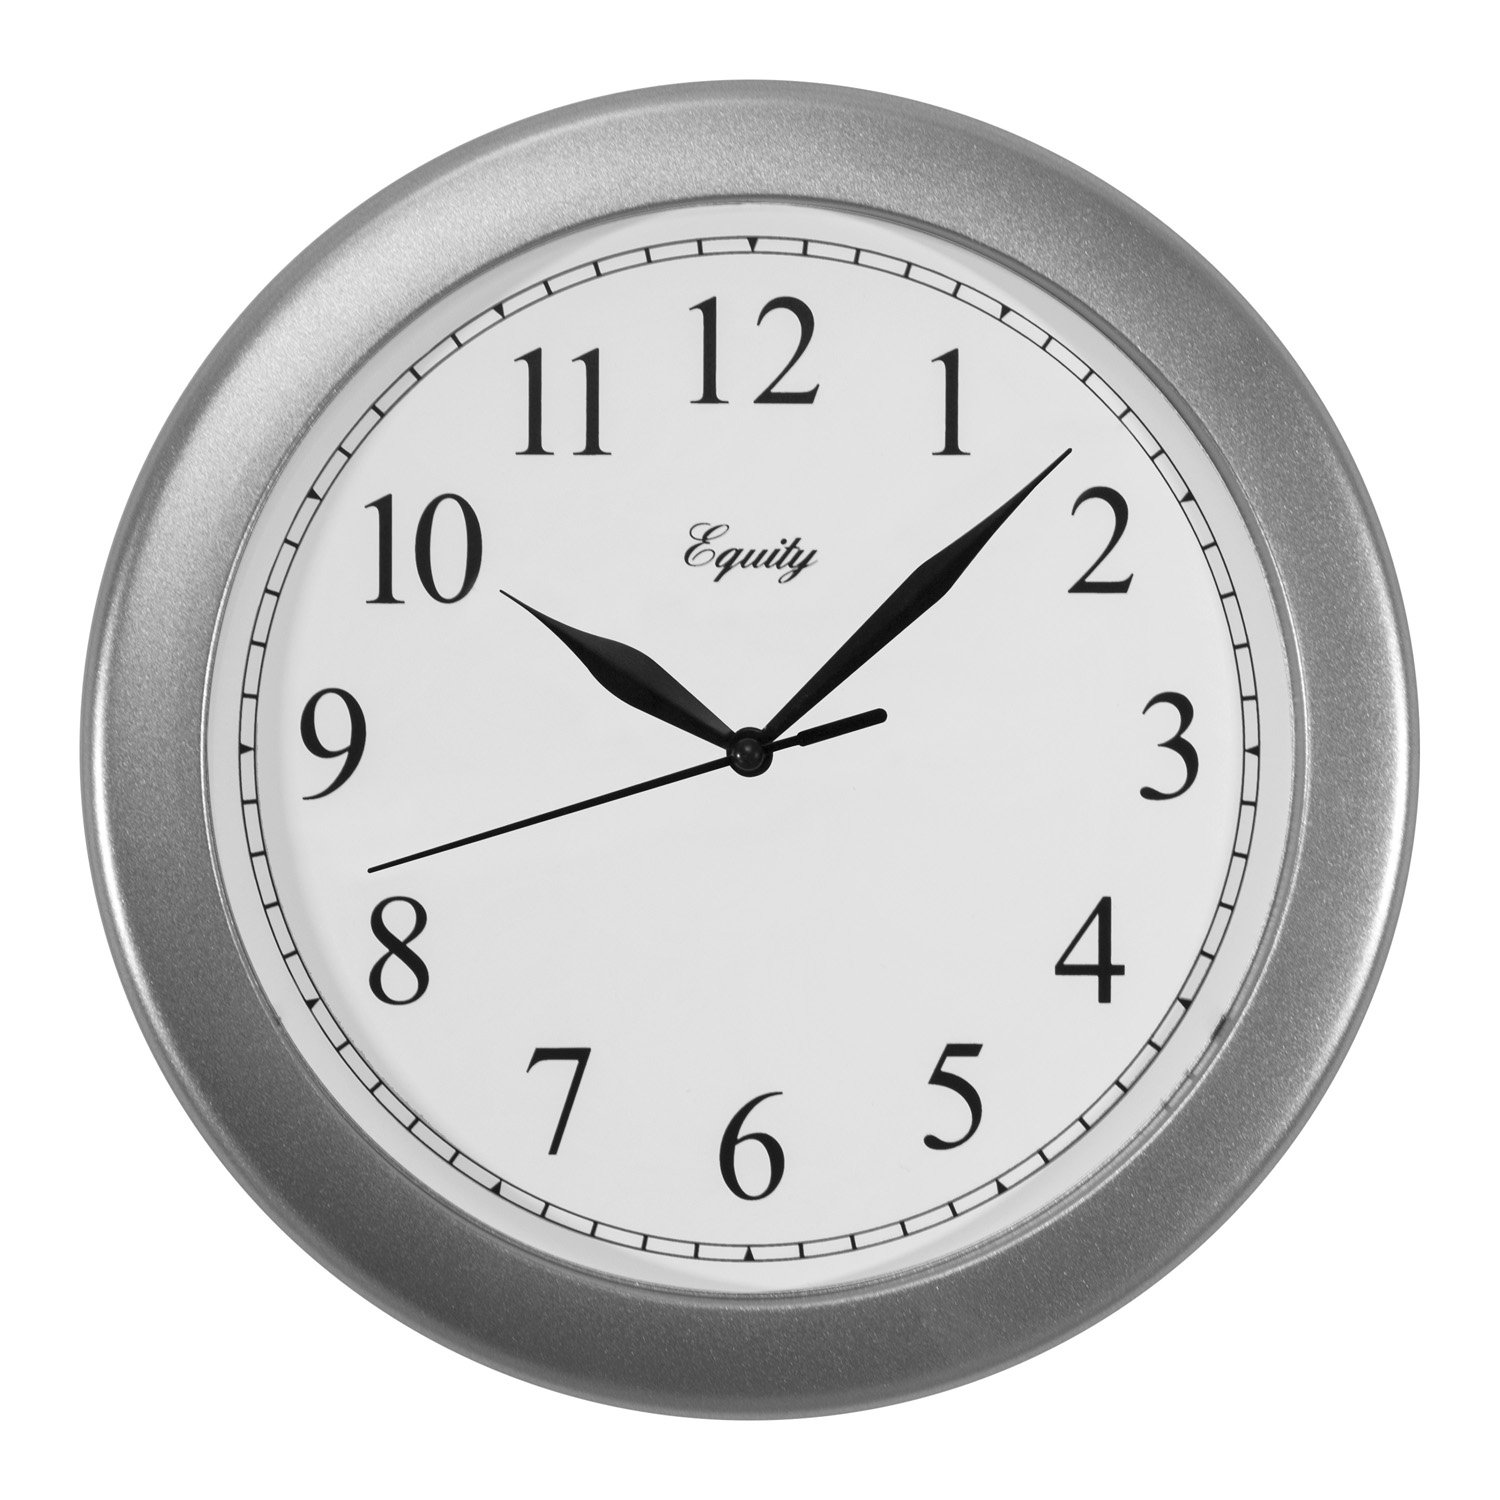 Equity by La Crosse 25206 10 Inch Silver Analog Quartz Wall Clock